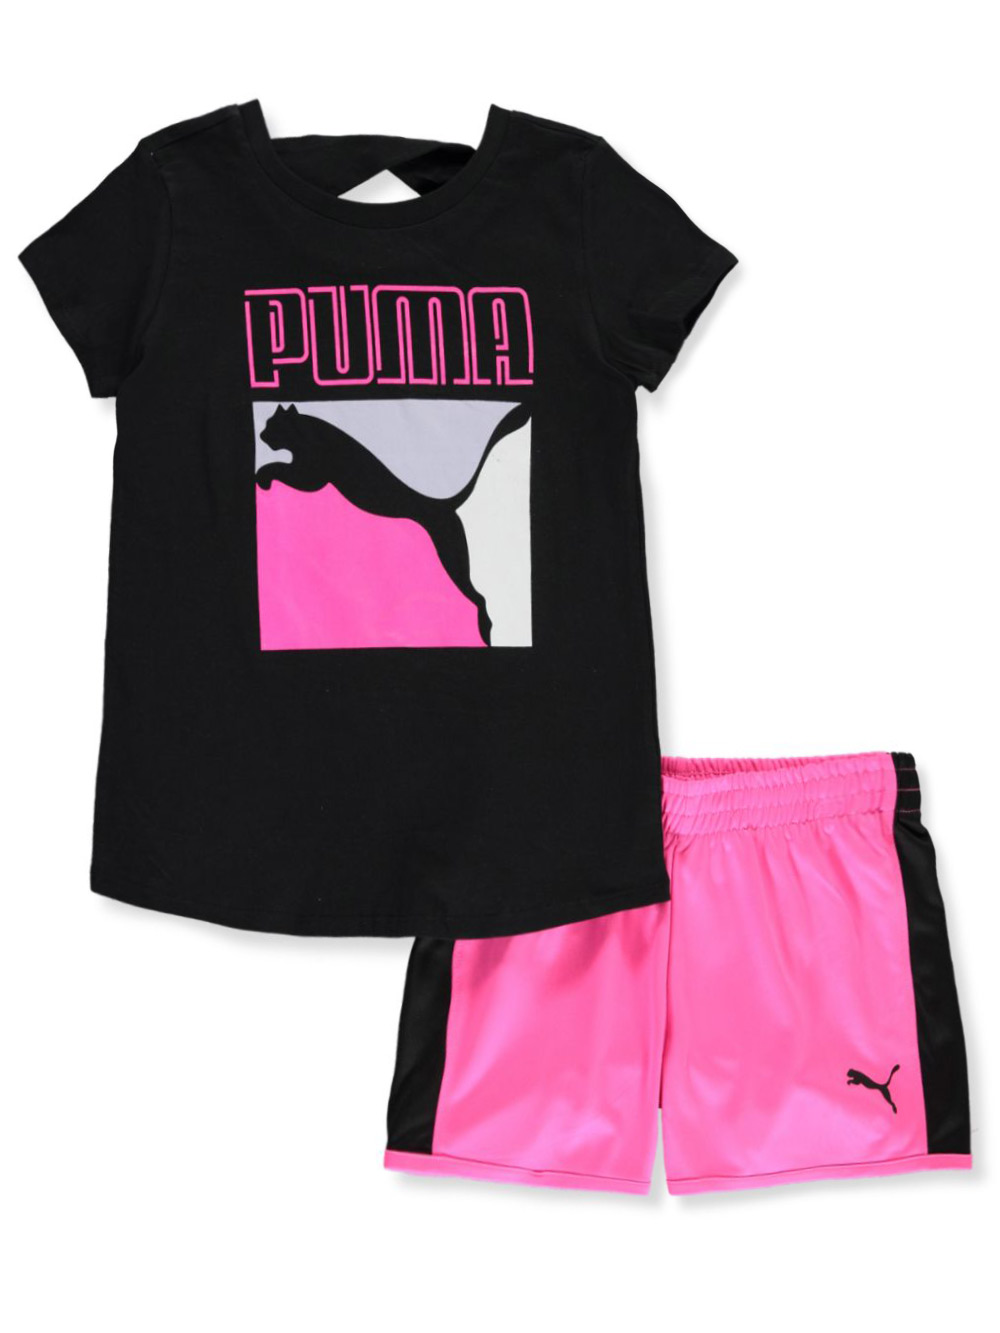 puma outfit set